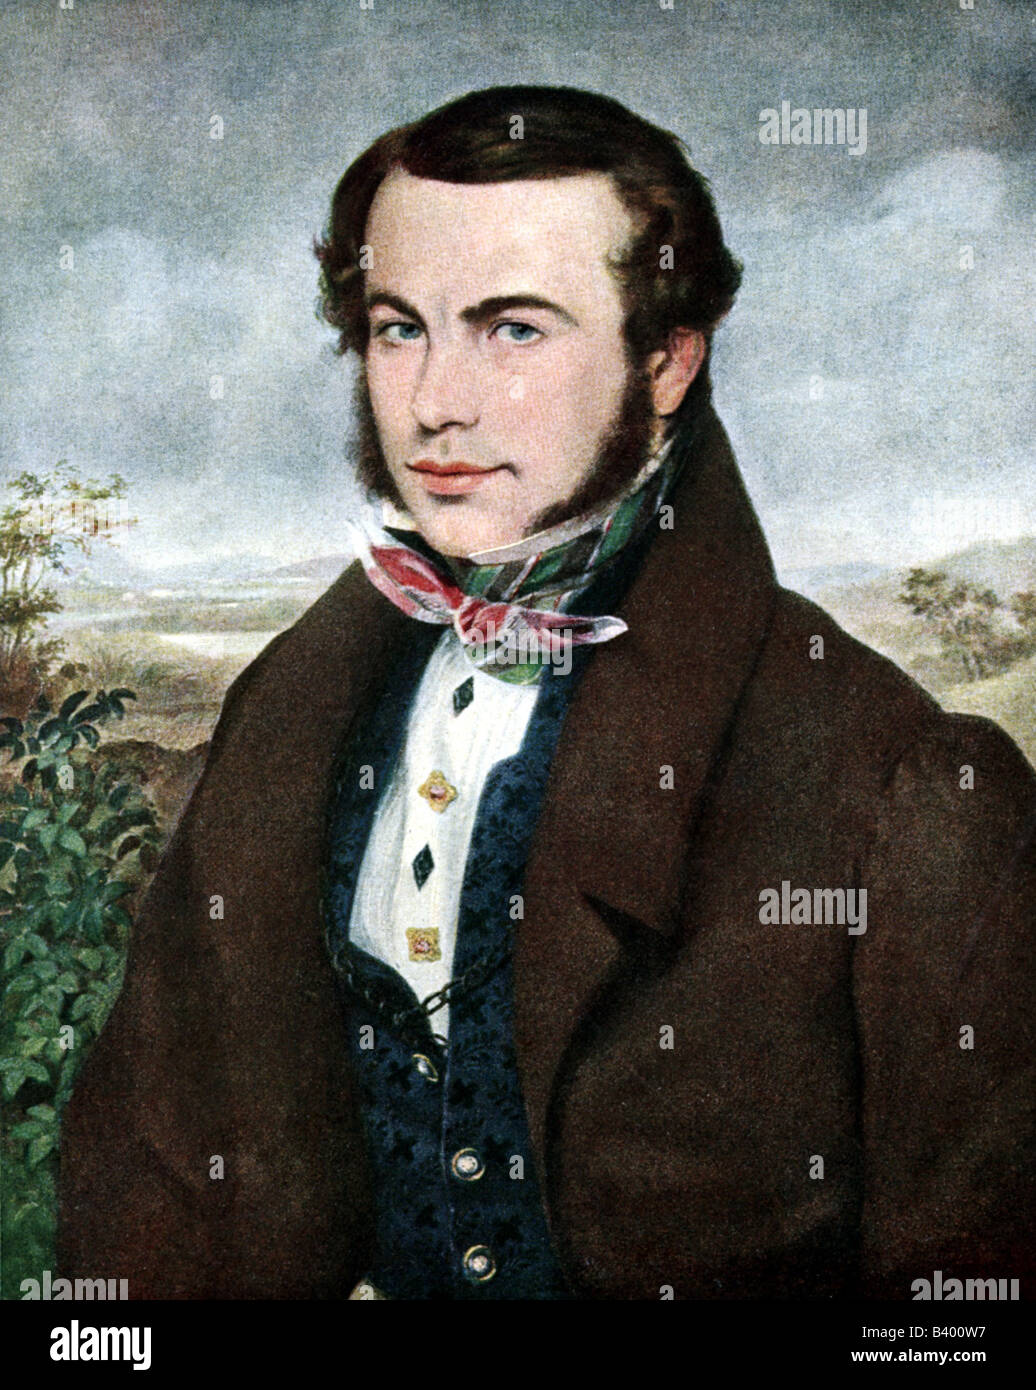 Stifter, Adalbert, 23.10.1805 - 28.1.1868, autore/scrittore austriaco, ritratto, Ferdinando Georg Waldmüller, (1793 - 1865), Foto Stock